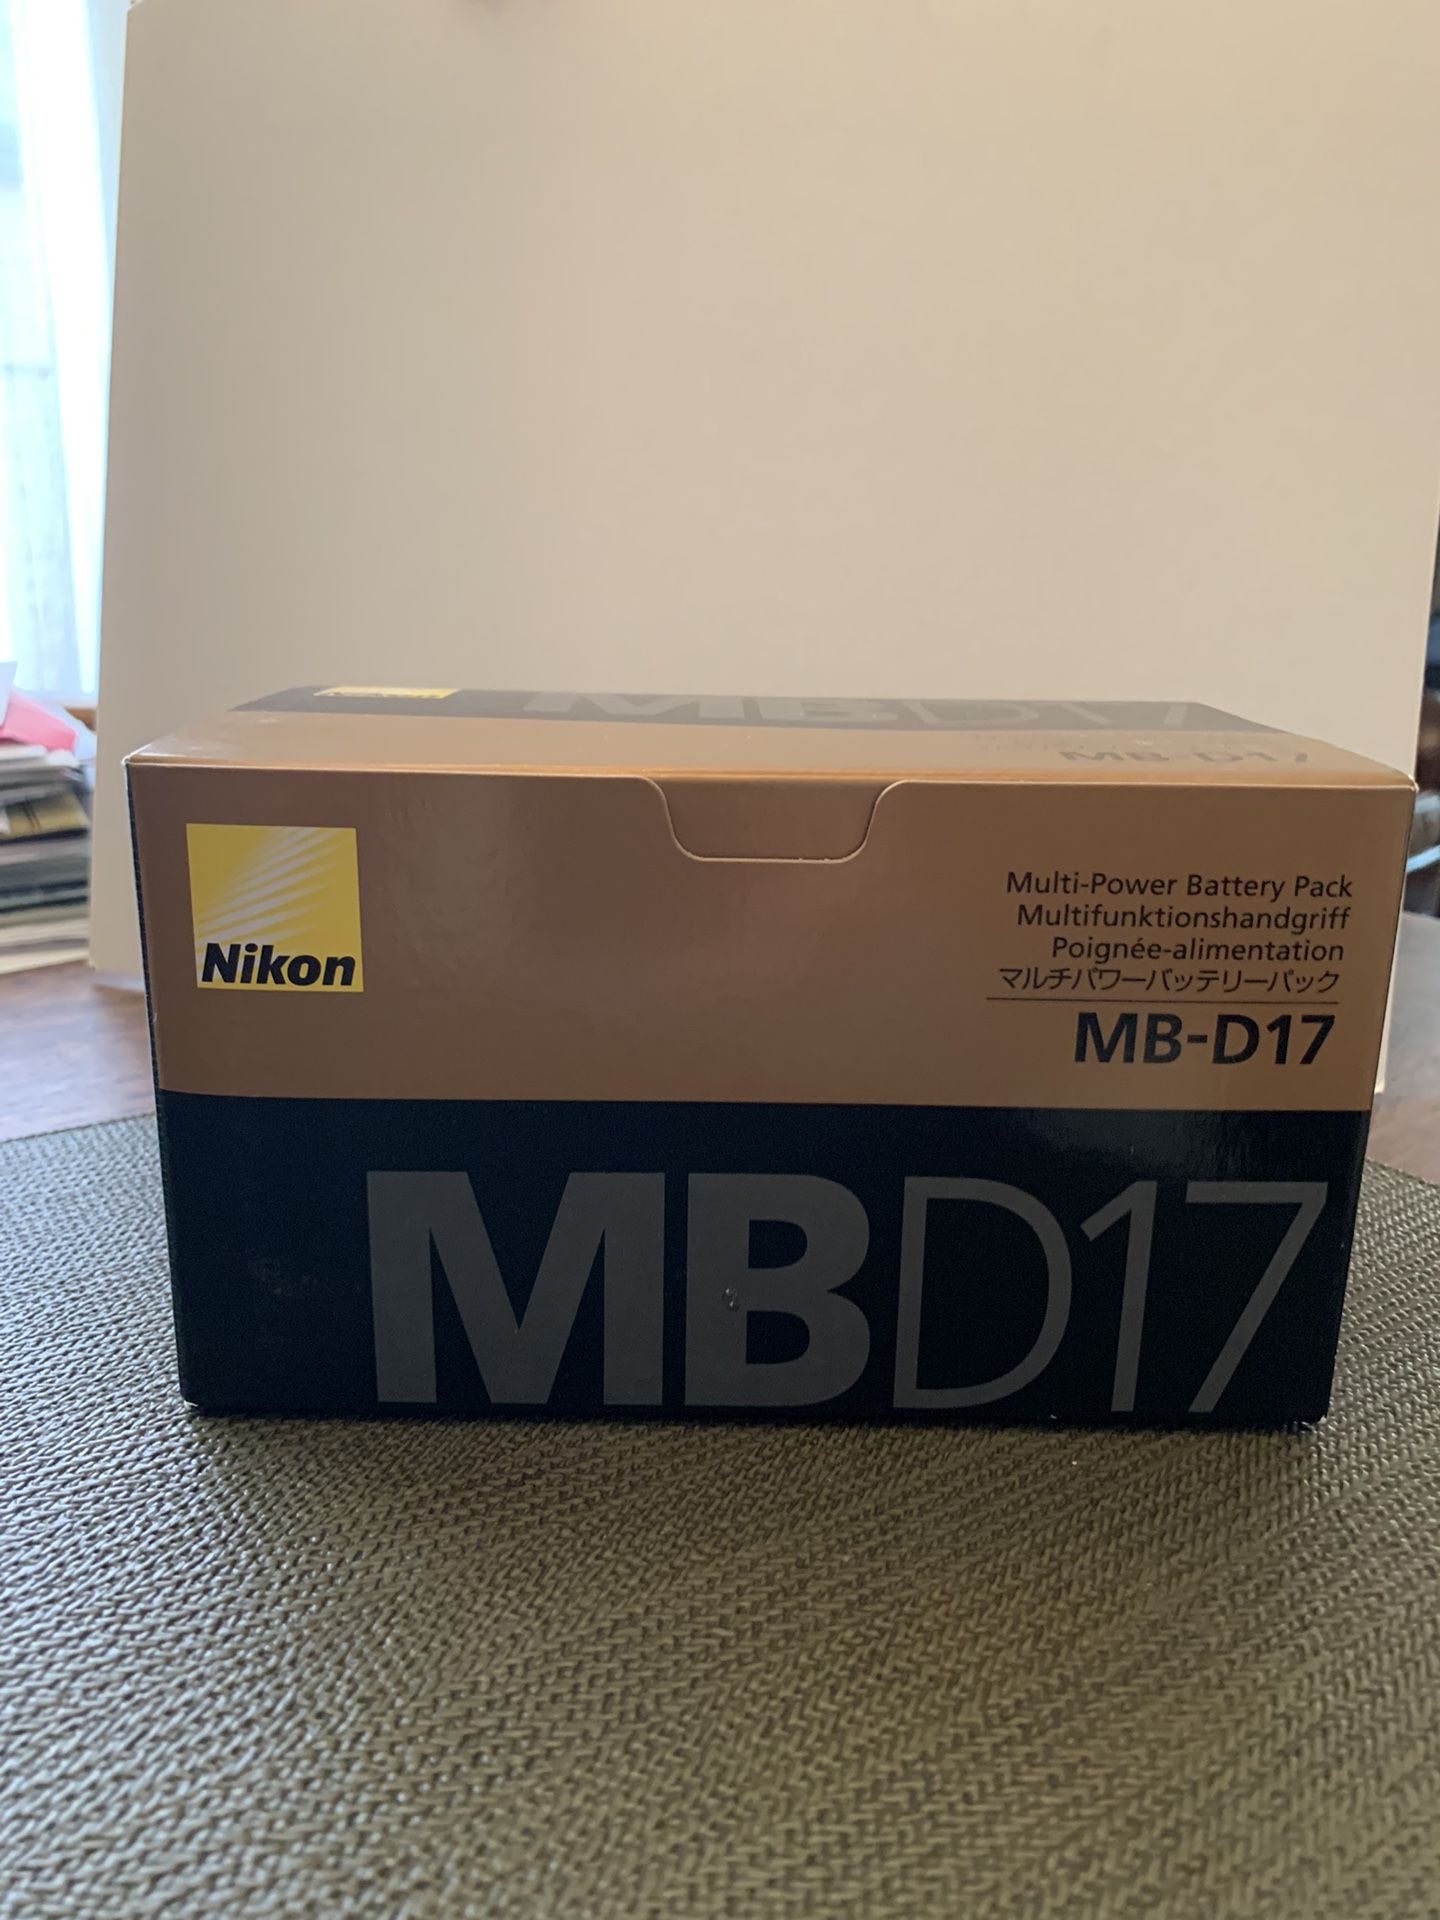 Nikon MB-D17 Multi Power Batter Pack